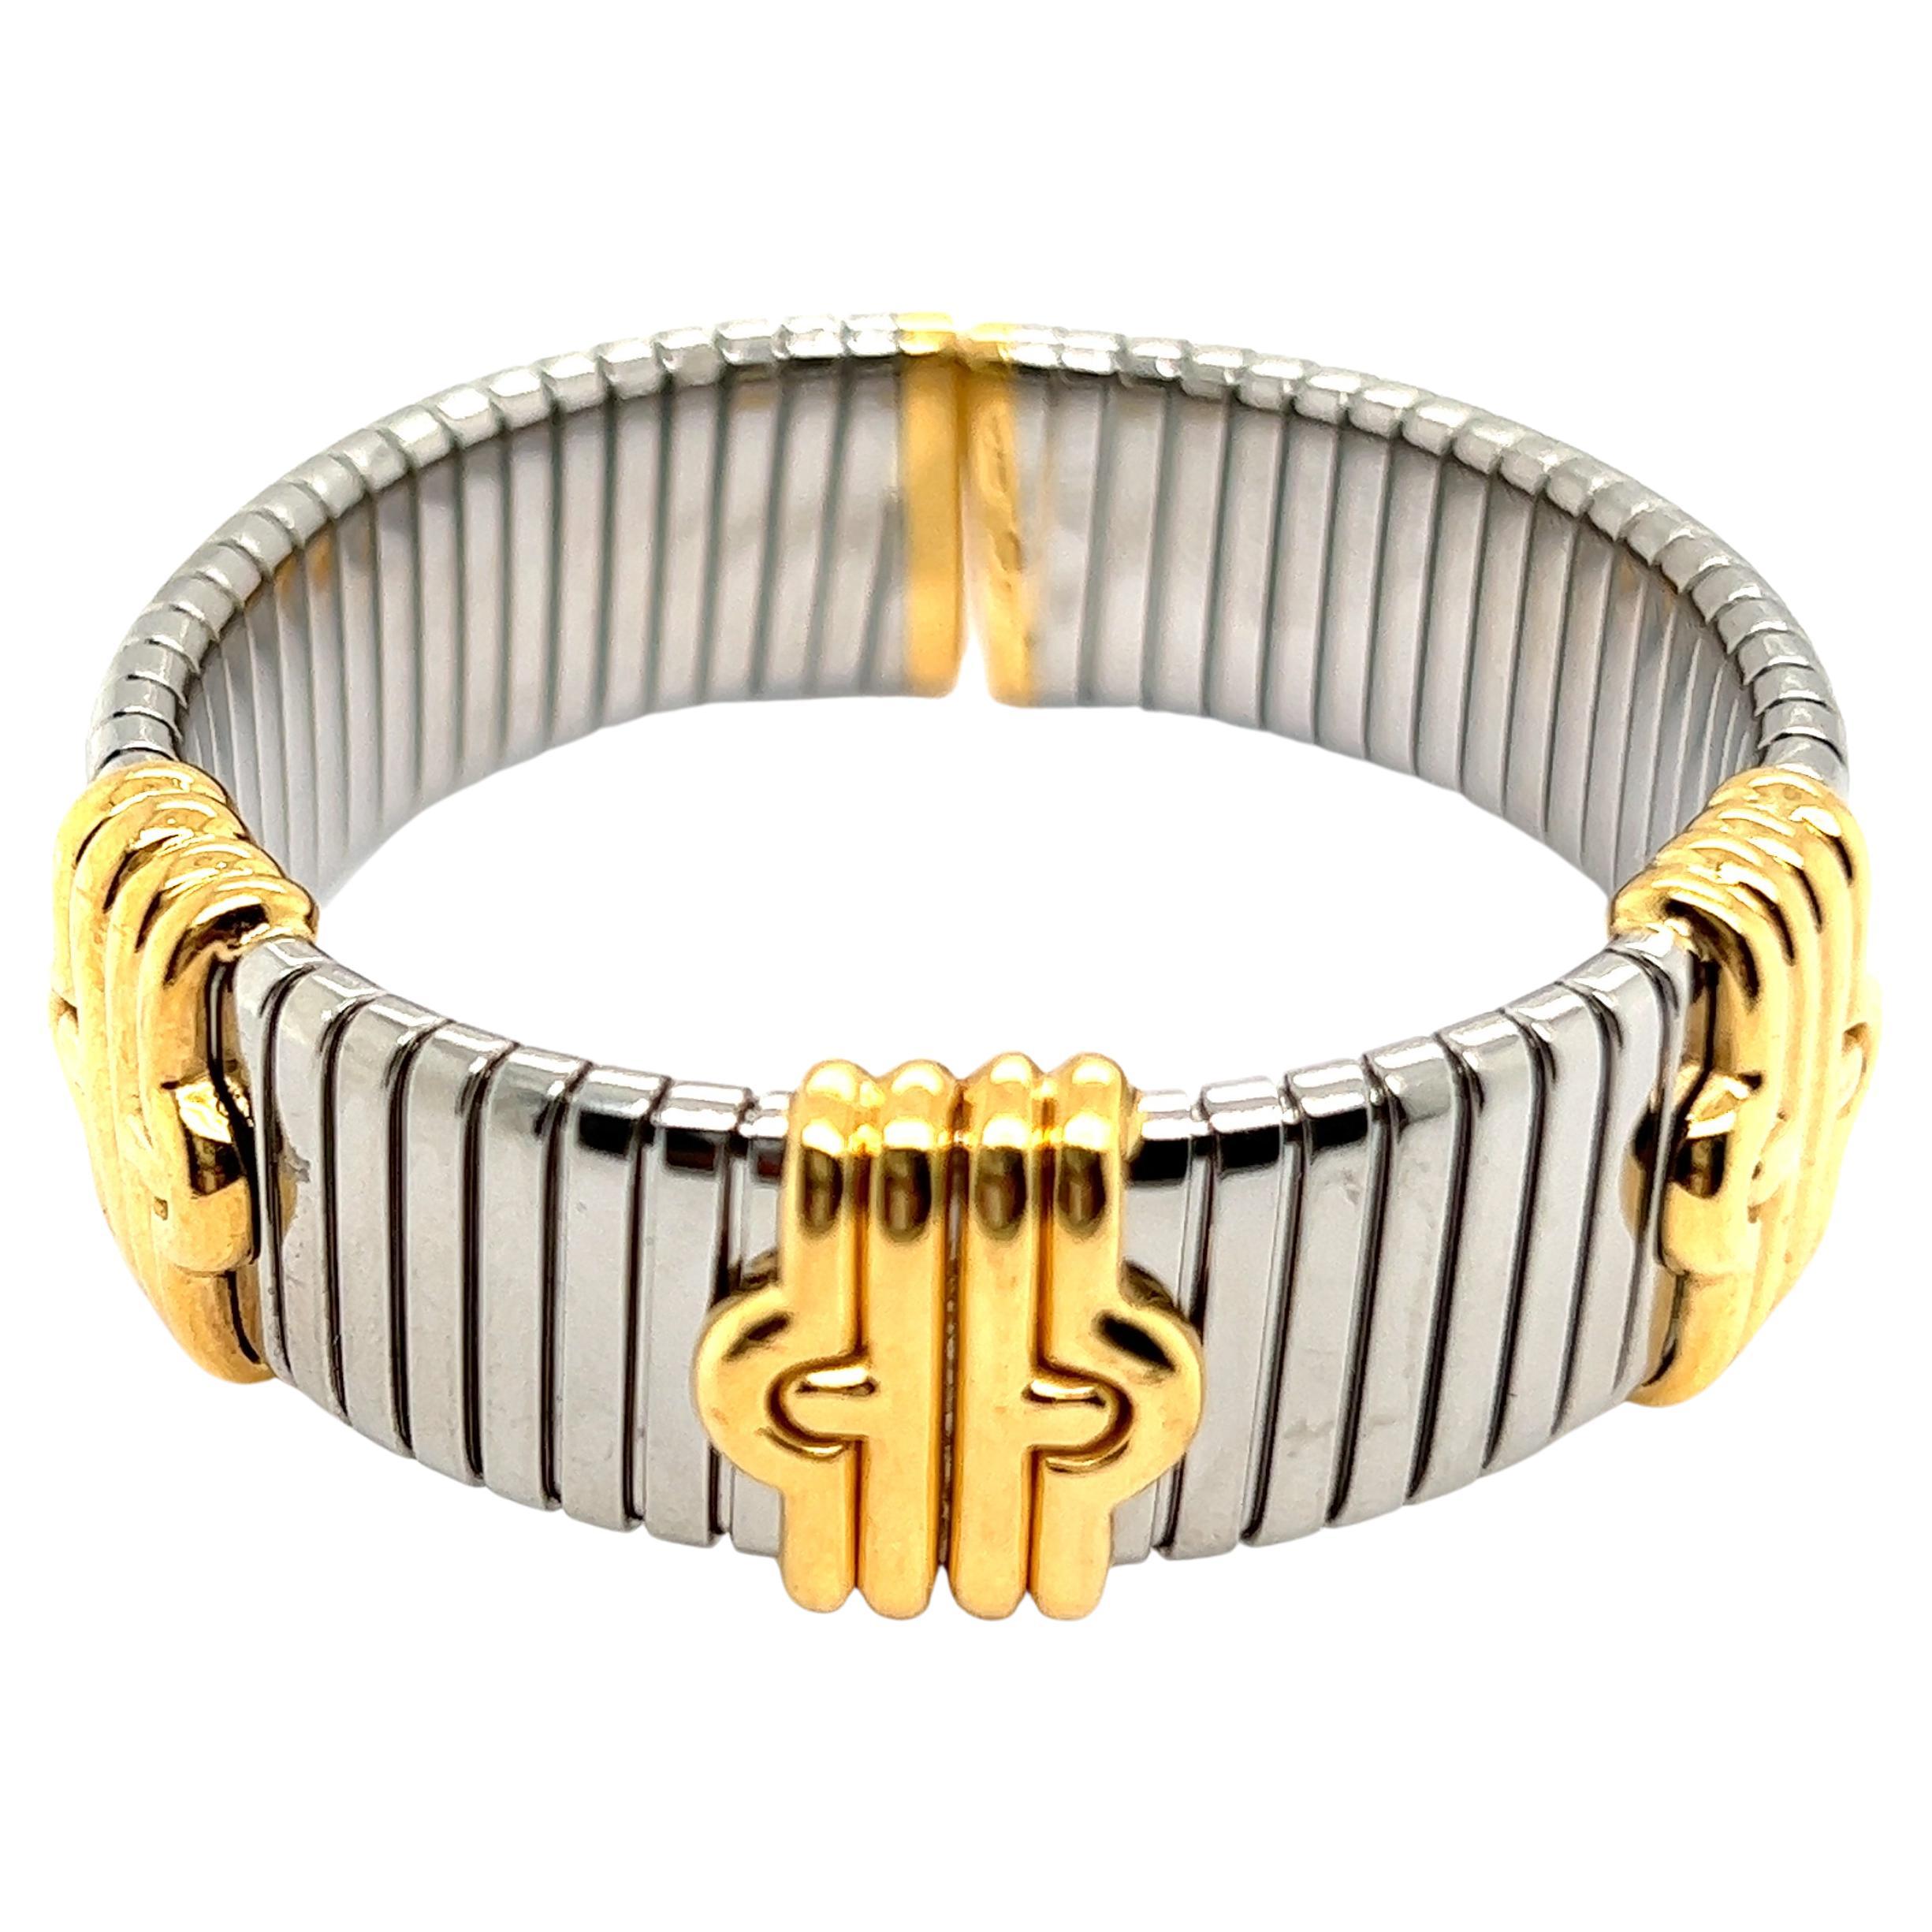 Bulgari 'Parentesi' Bracelet in 18 Karat Yellow Gold & Stainless Steel